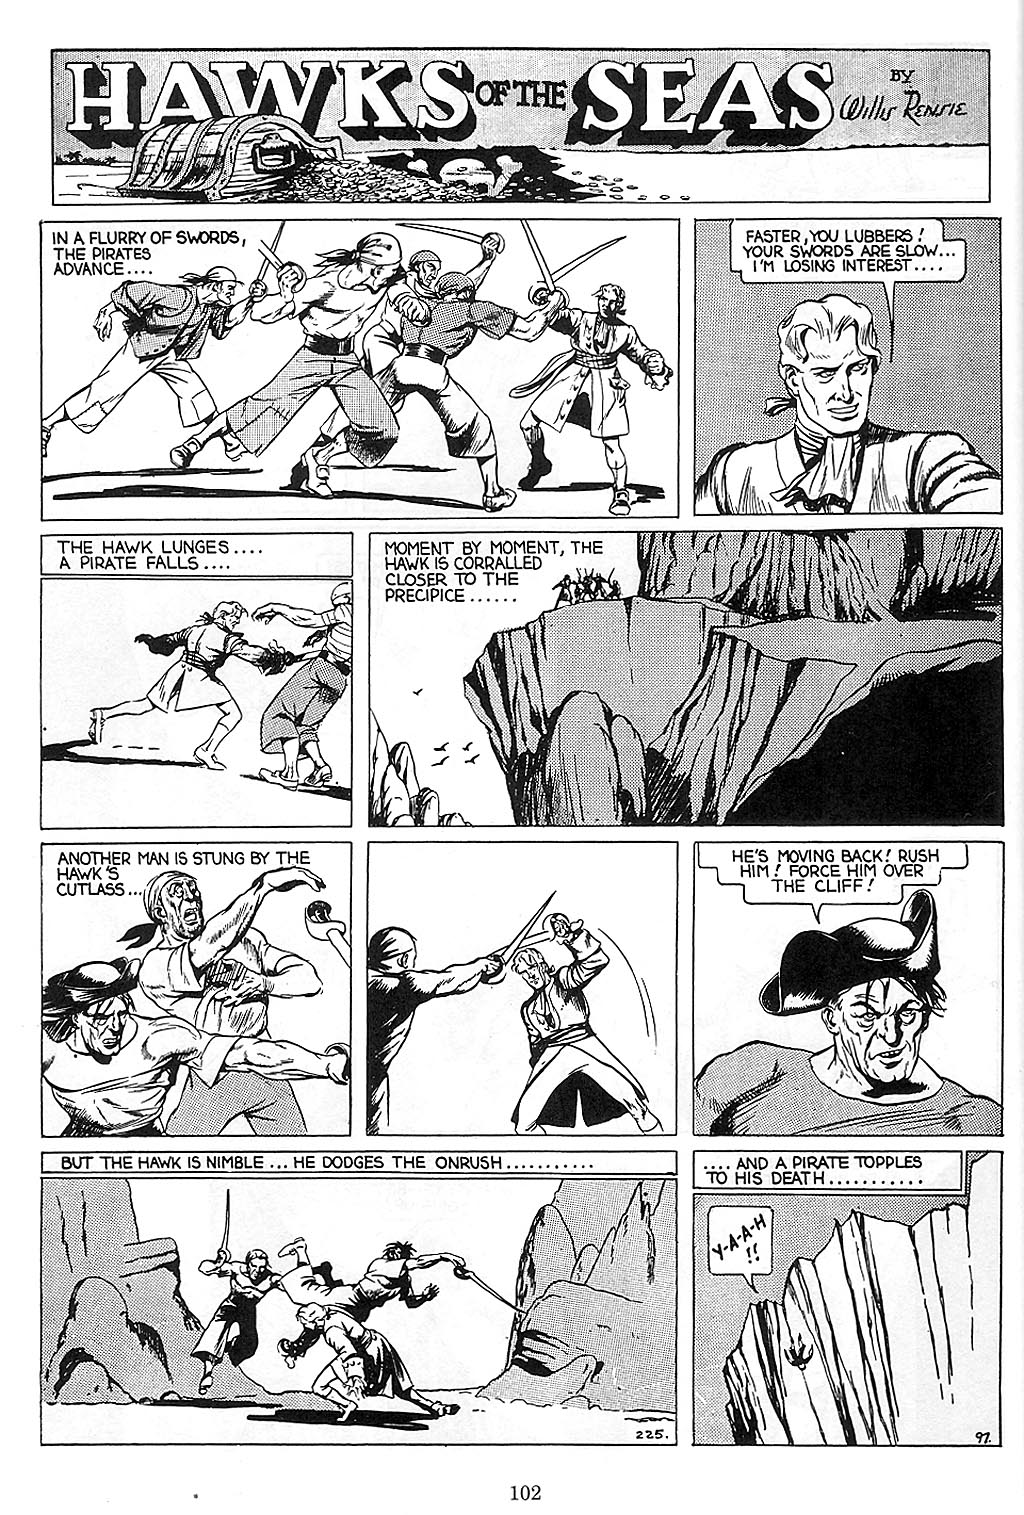 Read online Will Eisner's Hawks of the Seas comic -  Issue # TPB - 103